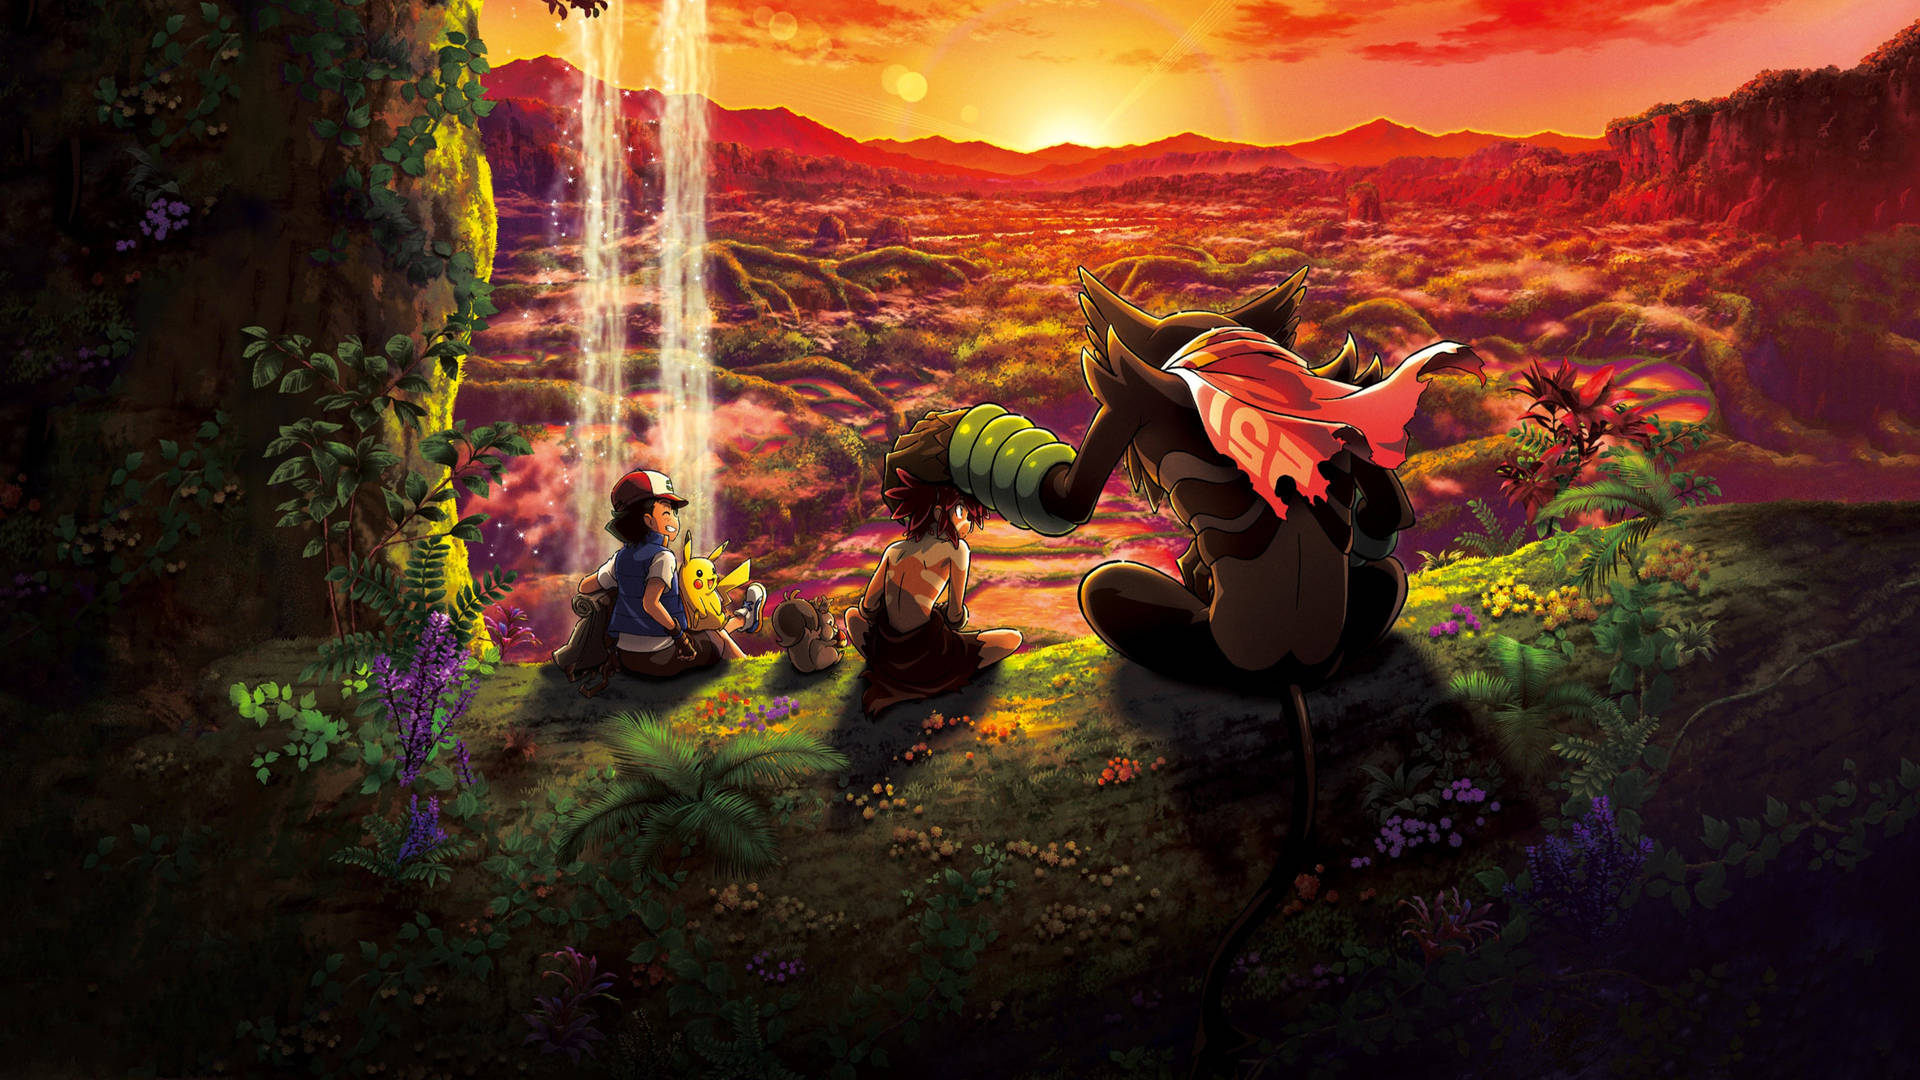 Zarudeash Koko Pikachu Film Wallpaper